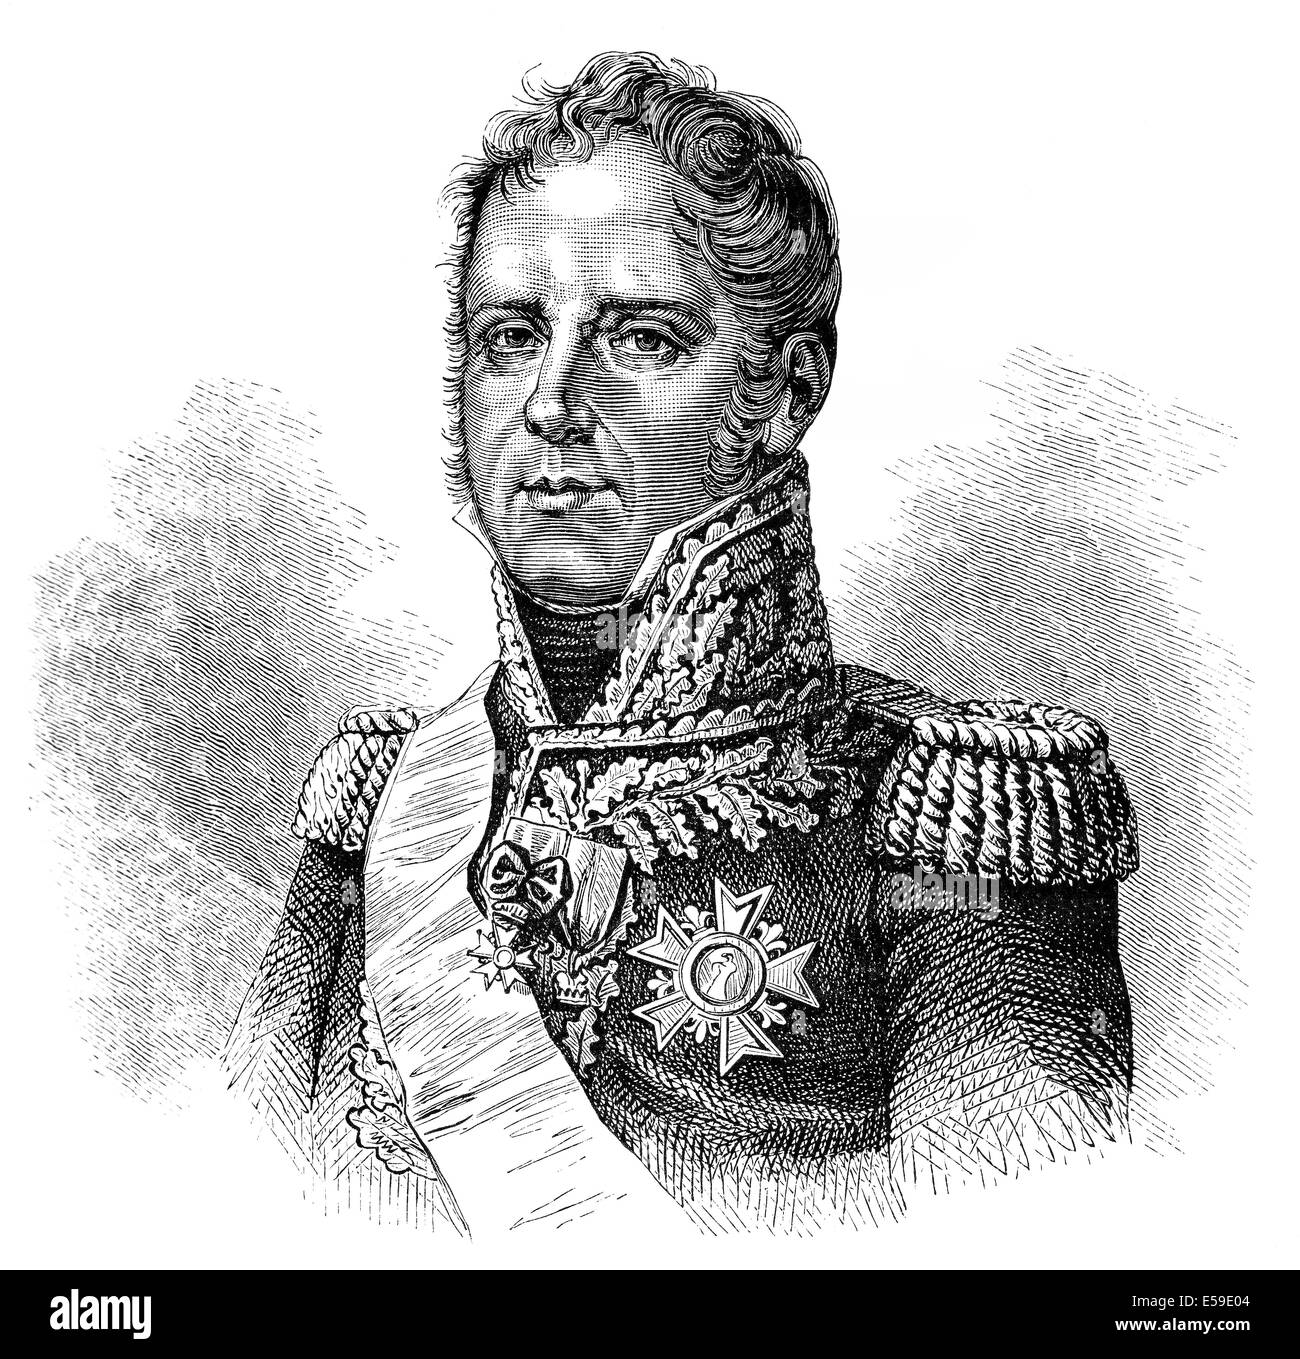 Michel Ney, 1st Duc d'Elchingen, 1st Prince de la Moskowa, Marshal Ney, 1769 - 1815, a French soldier and military commander Stock Photo